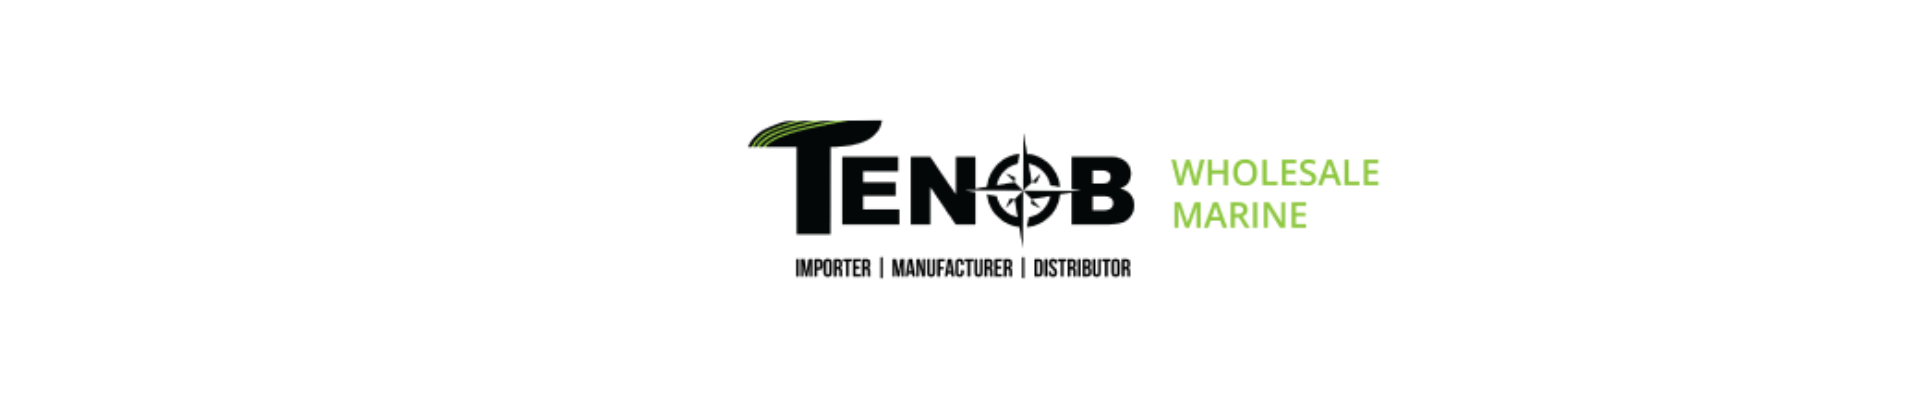 Tenob